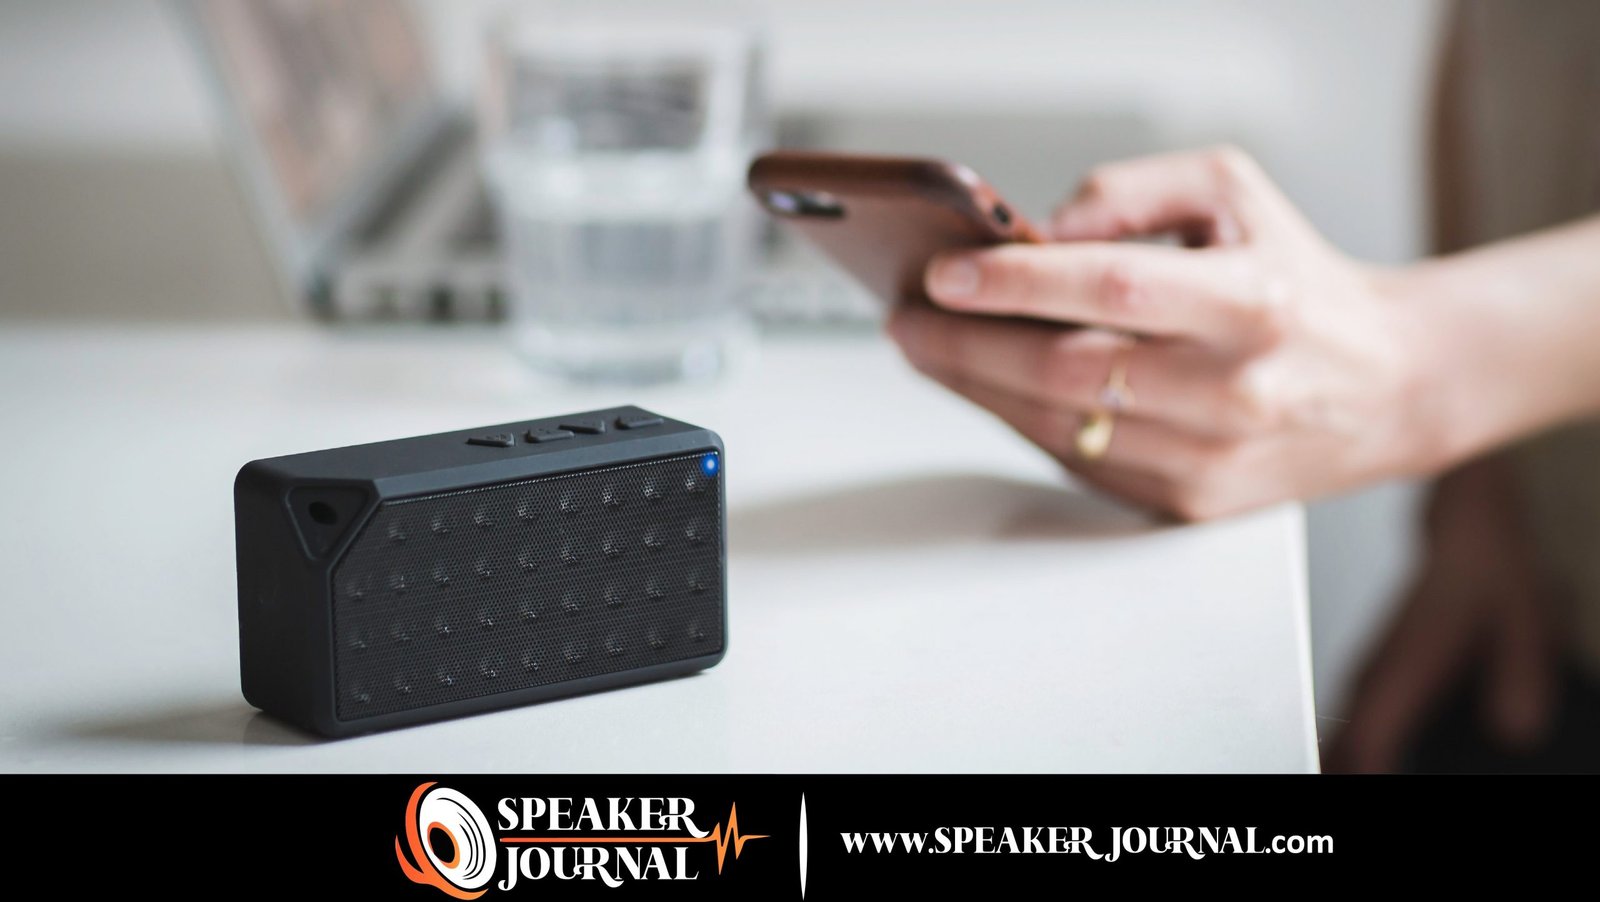 How To Make Speakers Louder? by speakerjournal.com